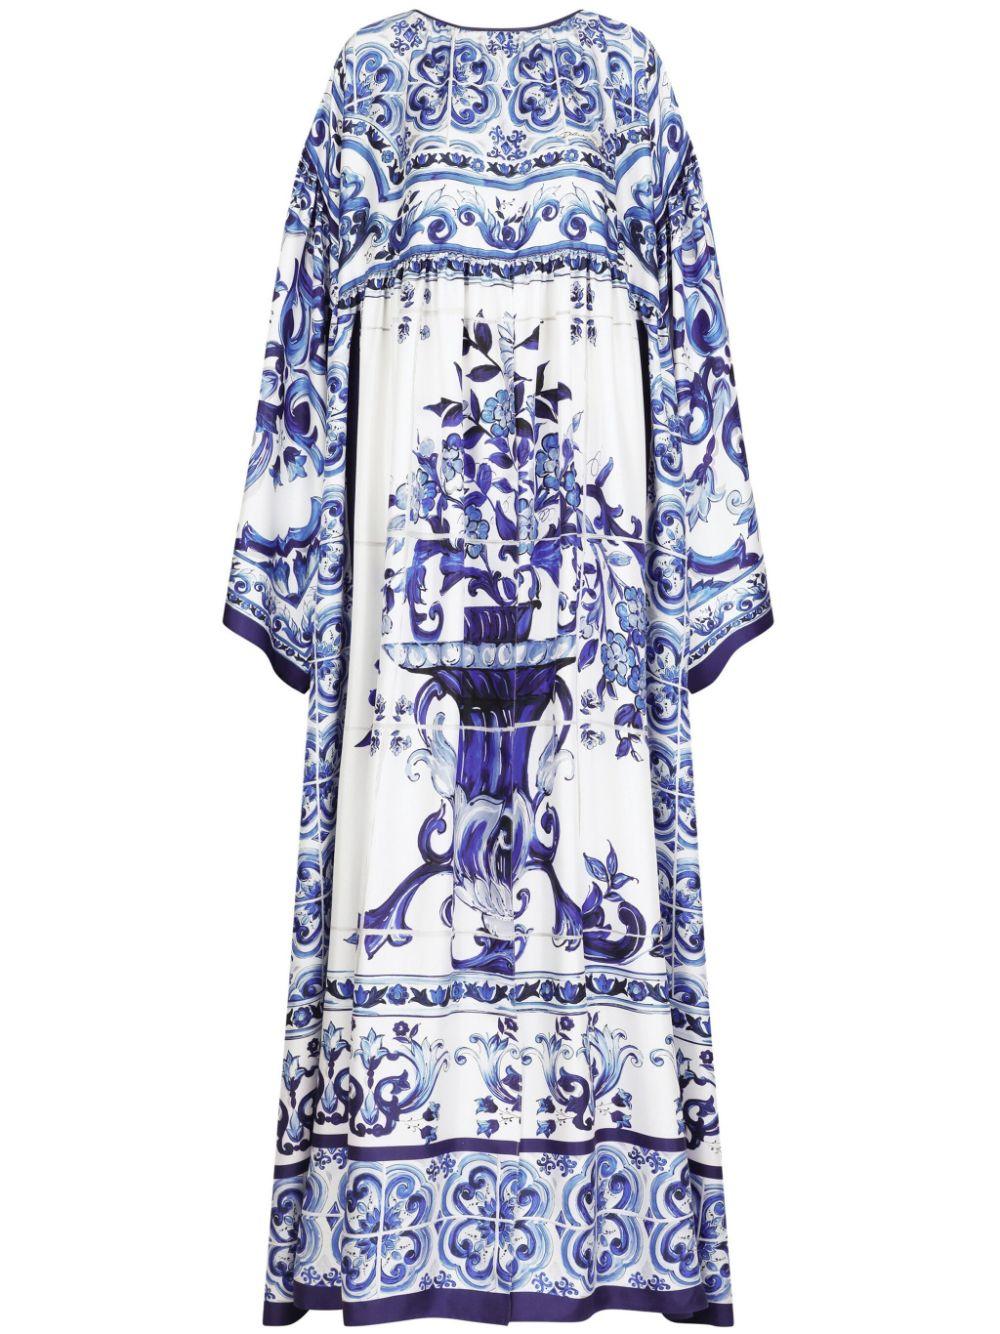 Dolce & Gabbana Majolica Print Dress, $1,995, farfetch.com